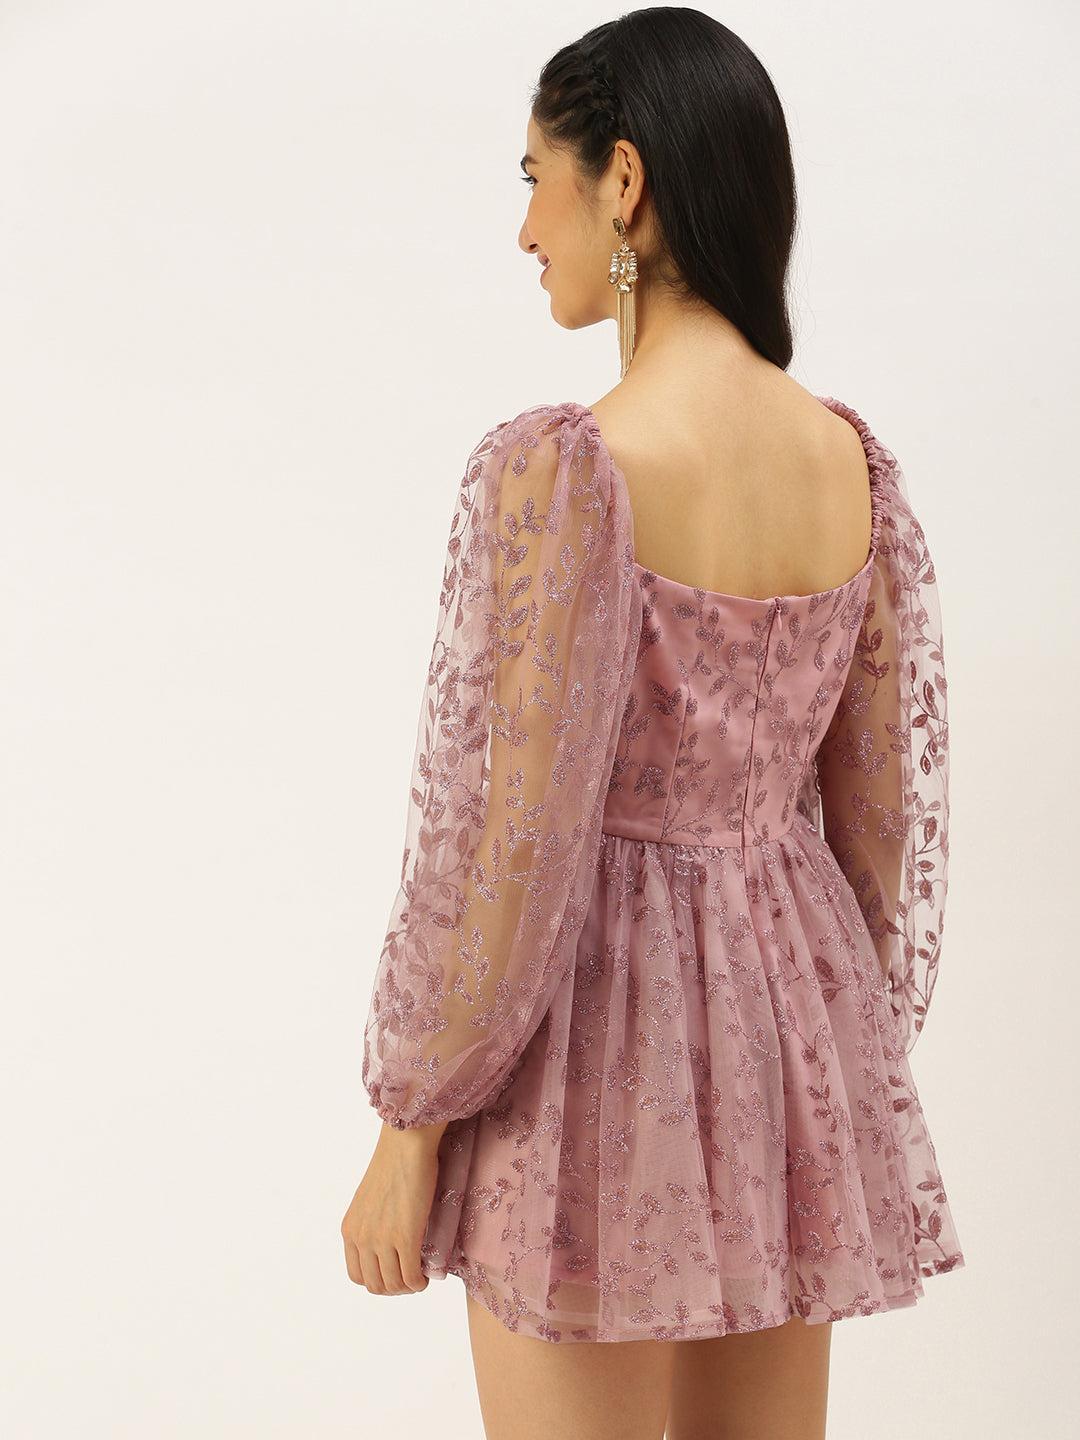 Pink-Foil-Printed-Net-Dress